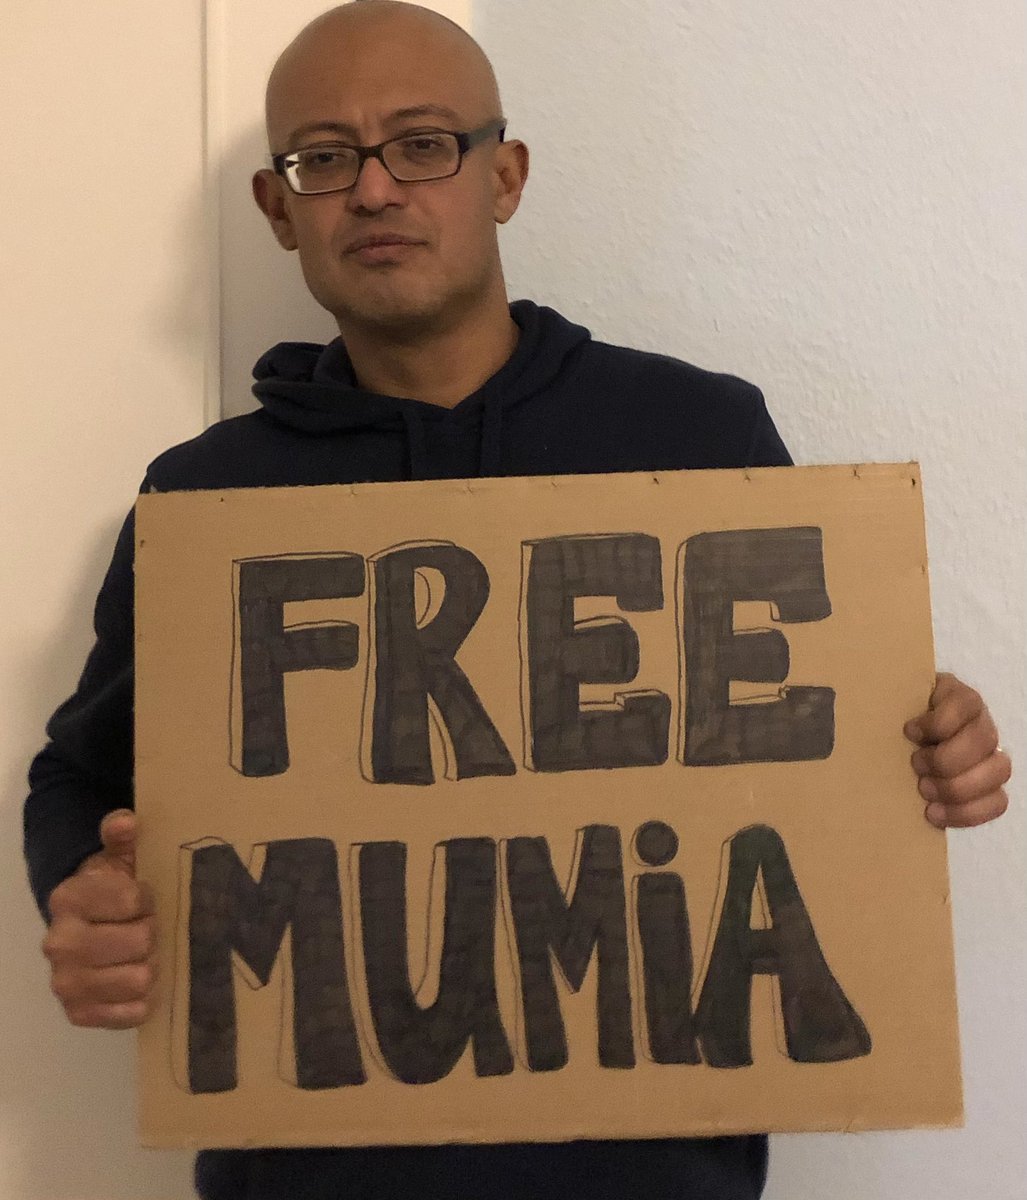 #FreeMumiaAbuJamal #FreeLeonardPeltier #FreeJamilAlAmin #FreeRevJoyPowell #FreeKennyZuluWhitmore #FreeOsoBlanco #FreeVeronzaBowers #FreeKevinRashidJohnson #FreeXinachtli #FreeKamauSadiki & all the other #PoliticalPrisoners @POTUS @UN @amnesty @ACLU #FreeMumia #FreeThemAll